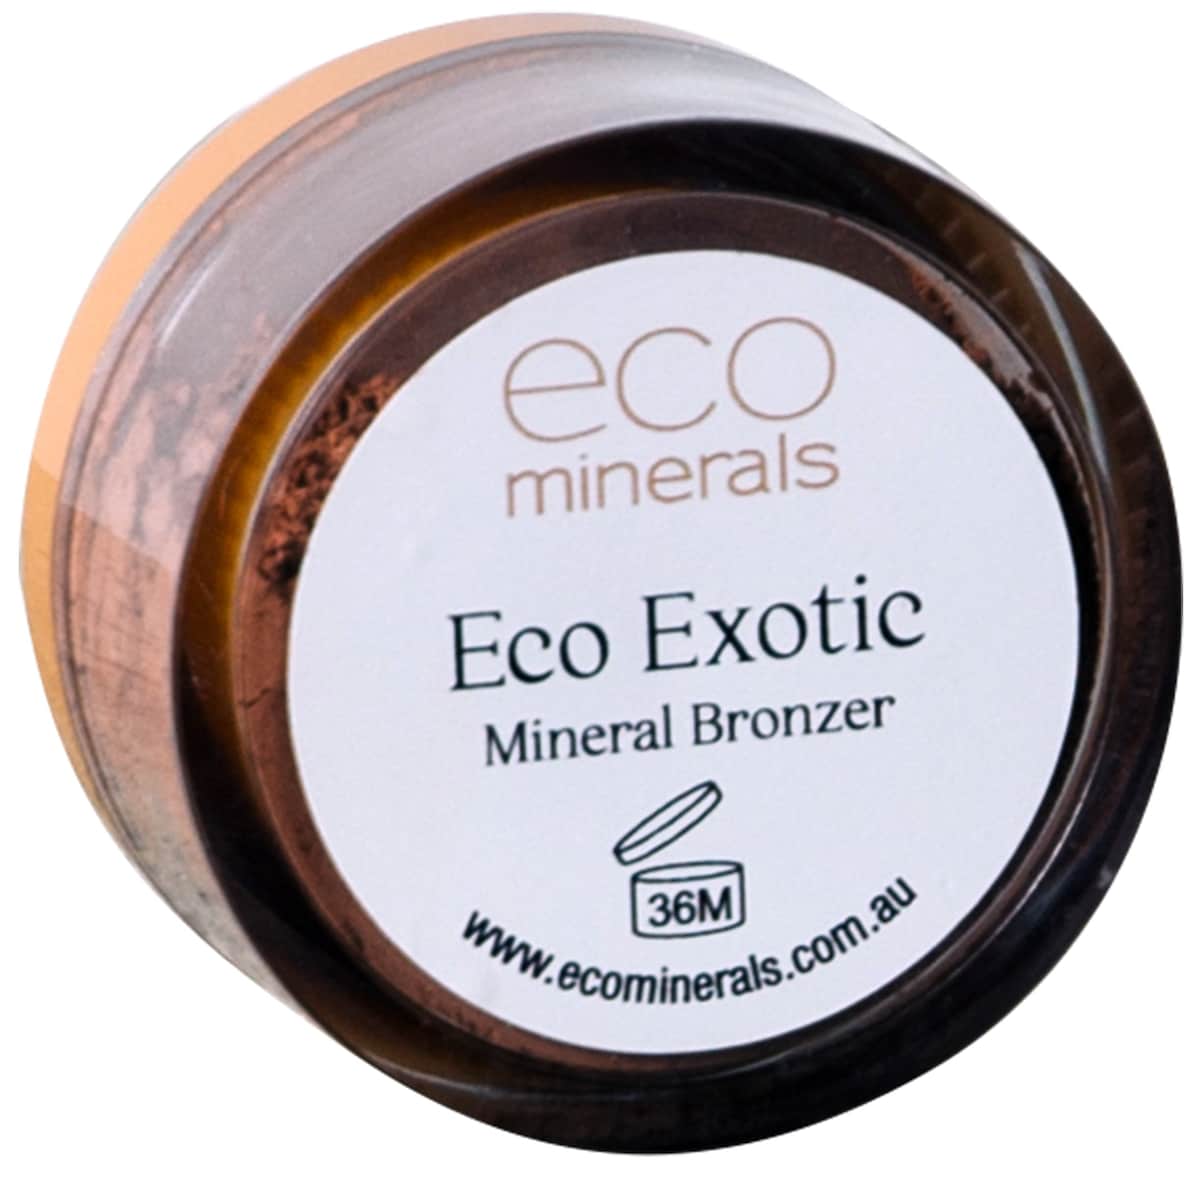 Eco Minerals Bronzer Jar Eco Exotic 4g